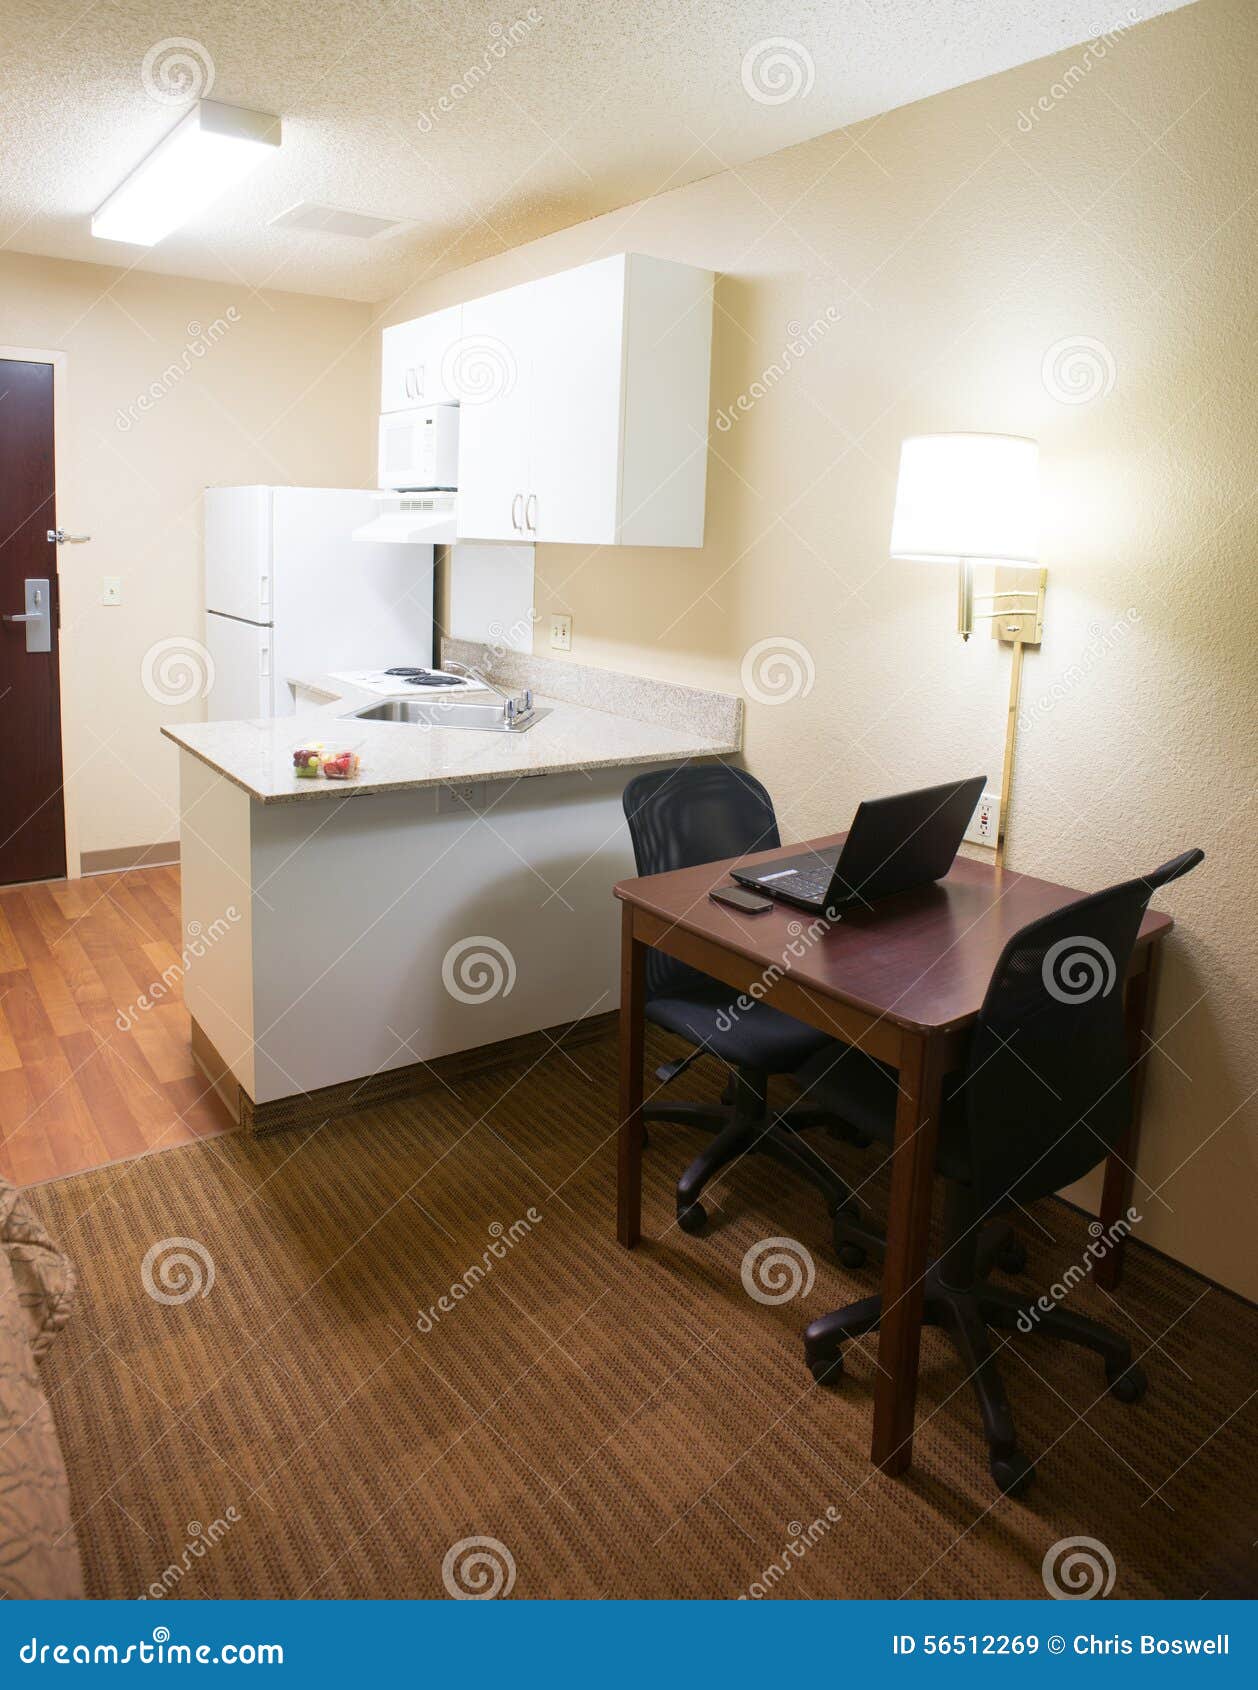 Motel Room Desk And Kitchen Area Hotel Traveler Stock Image